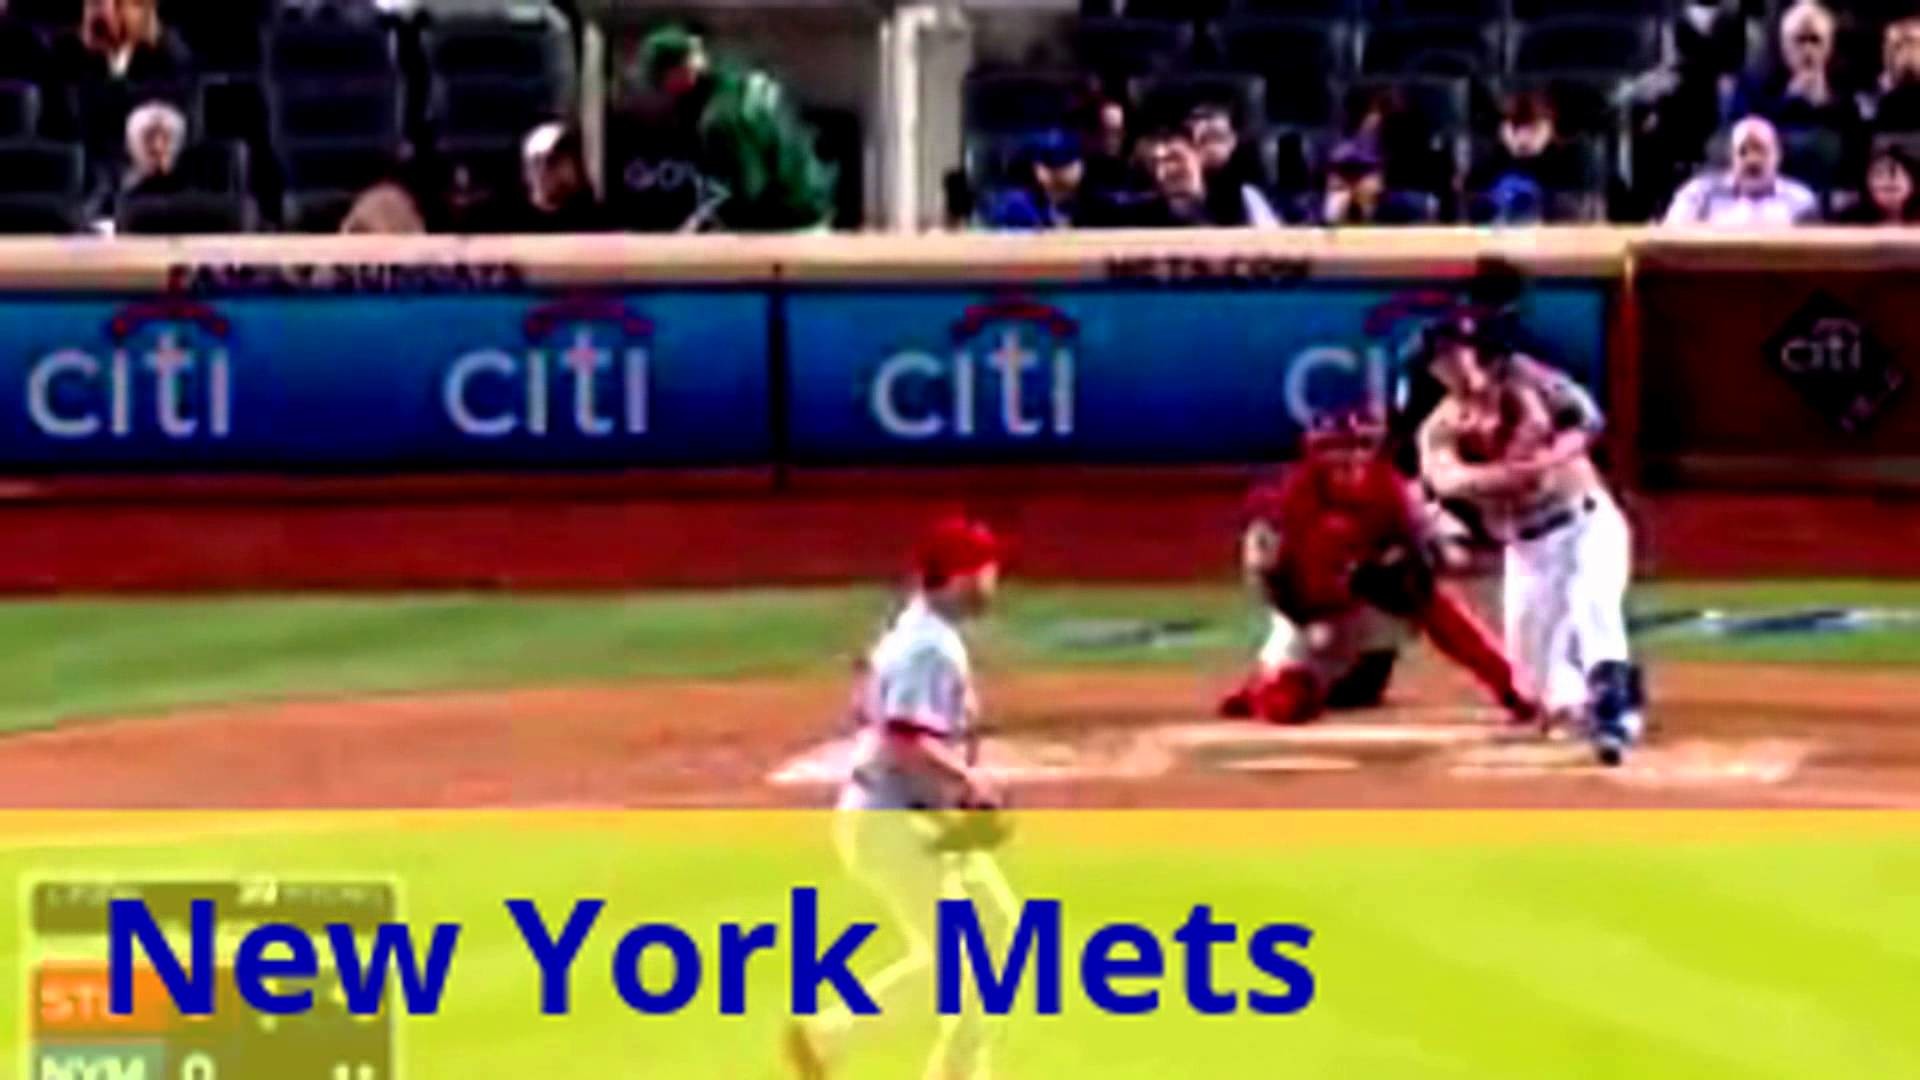 1920x1080 WORLD SERIES 2015: New York Mets vs Kansas City Royals Schedule,  Prediction, Tickets